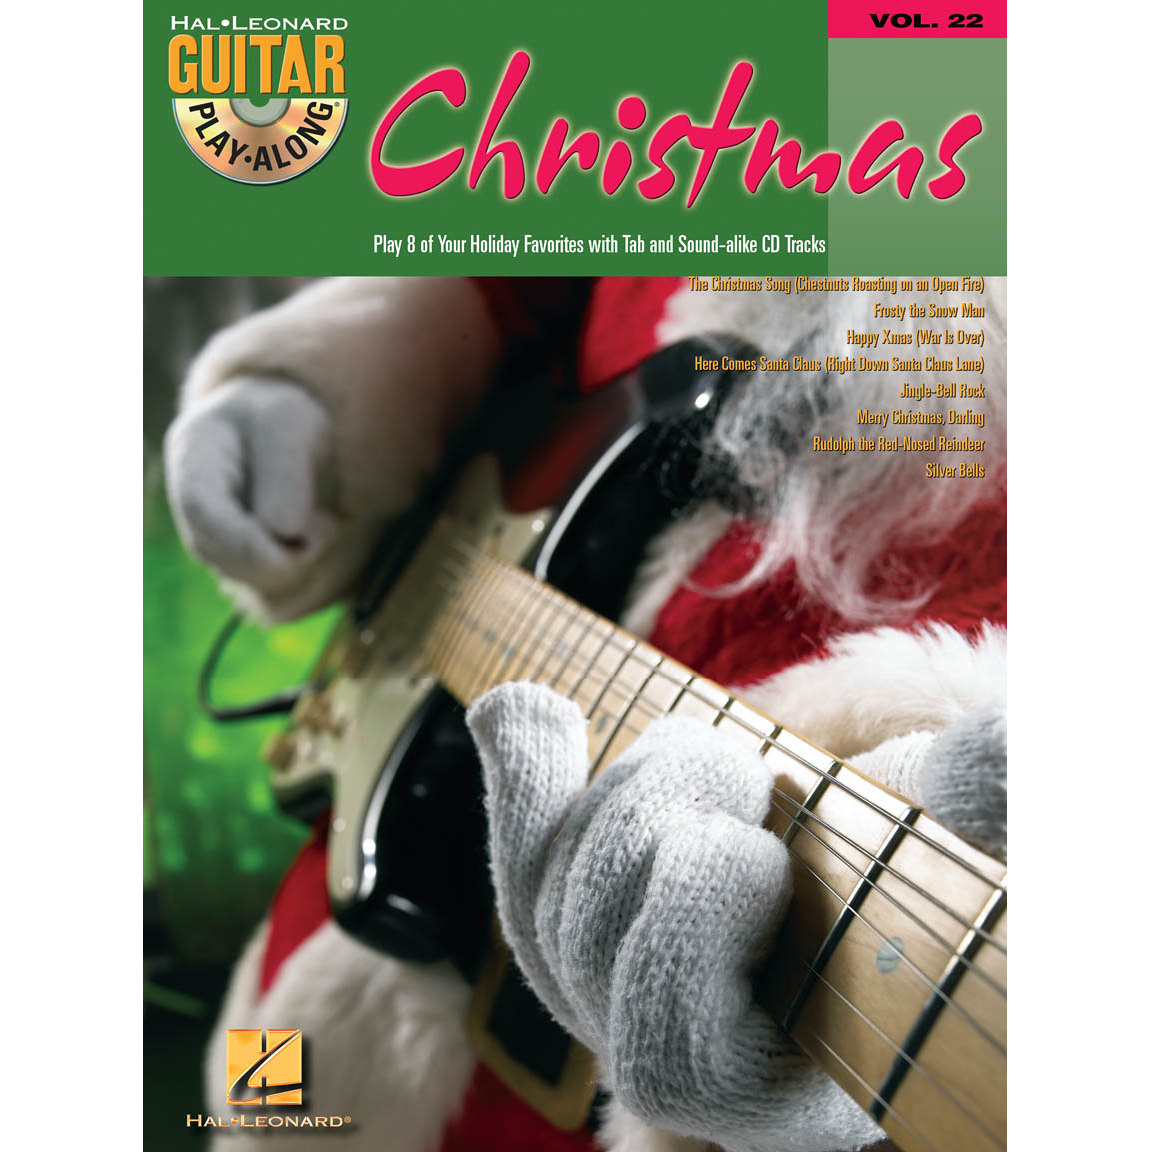 Jingle Bell Rock Jingle Bells Christmas music Album, Guitar